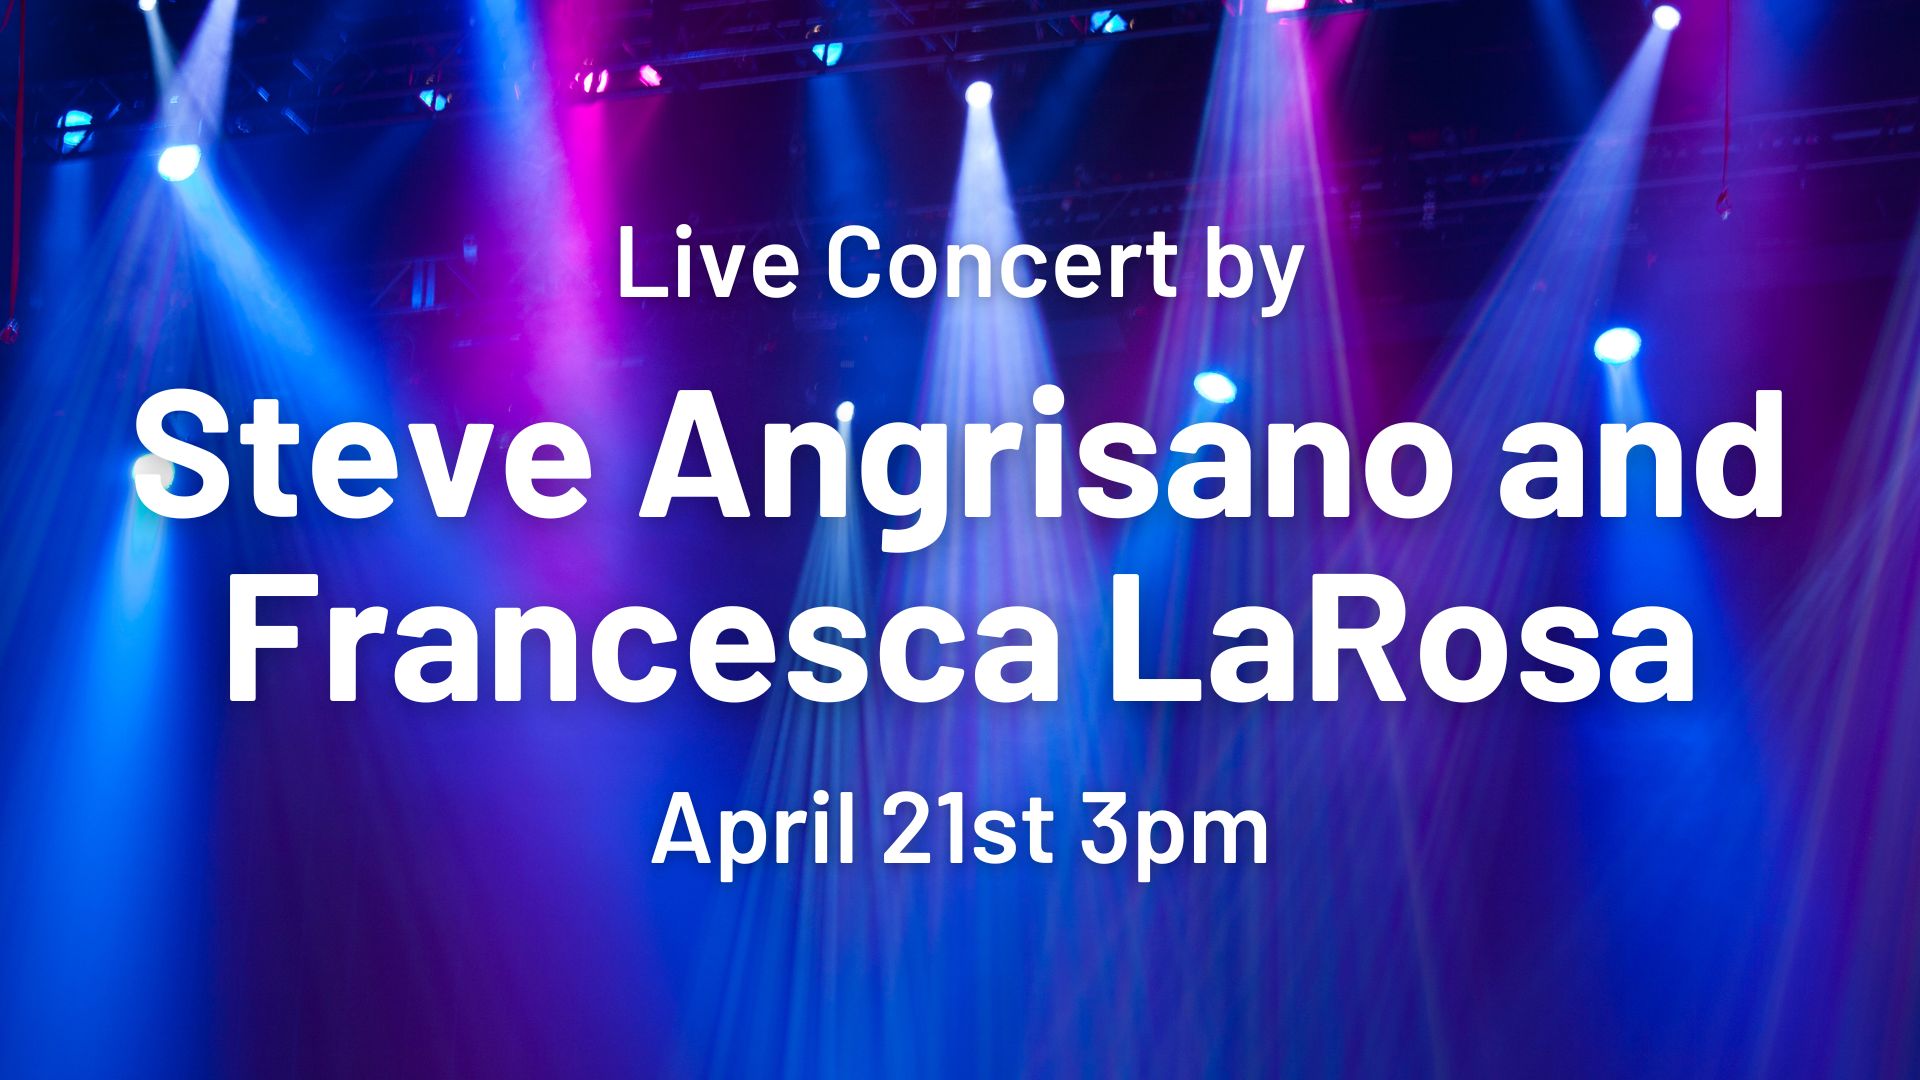 Steve Angrisano and Francesca LaRosa in Concert April 21st